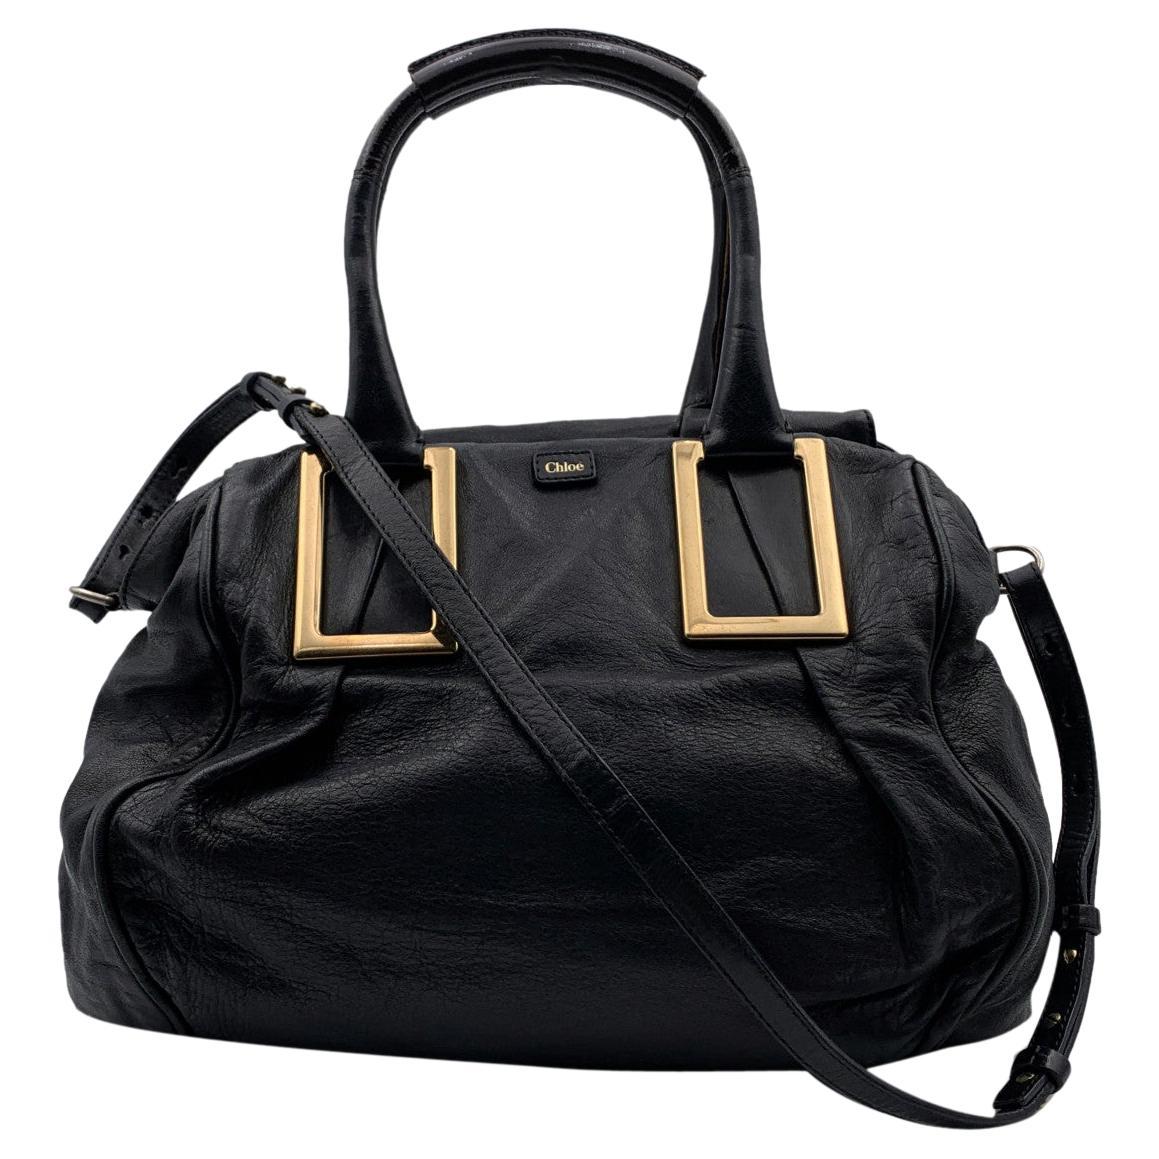 Chloe Black Leather Ethe lBag Tote Satchel Handbag with Strap For Sale ...